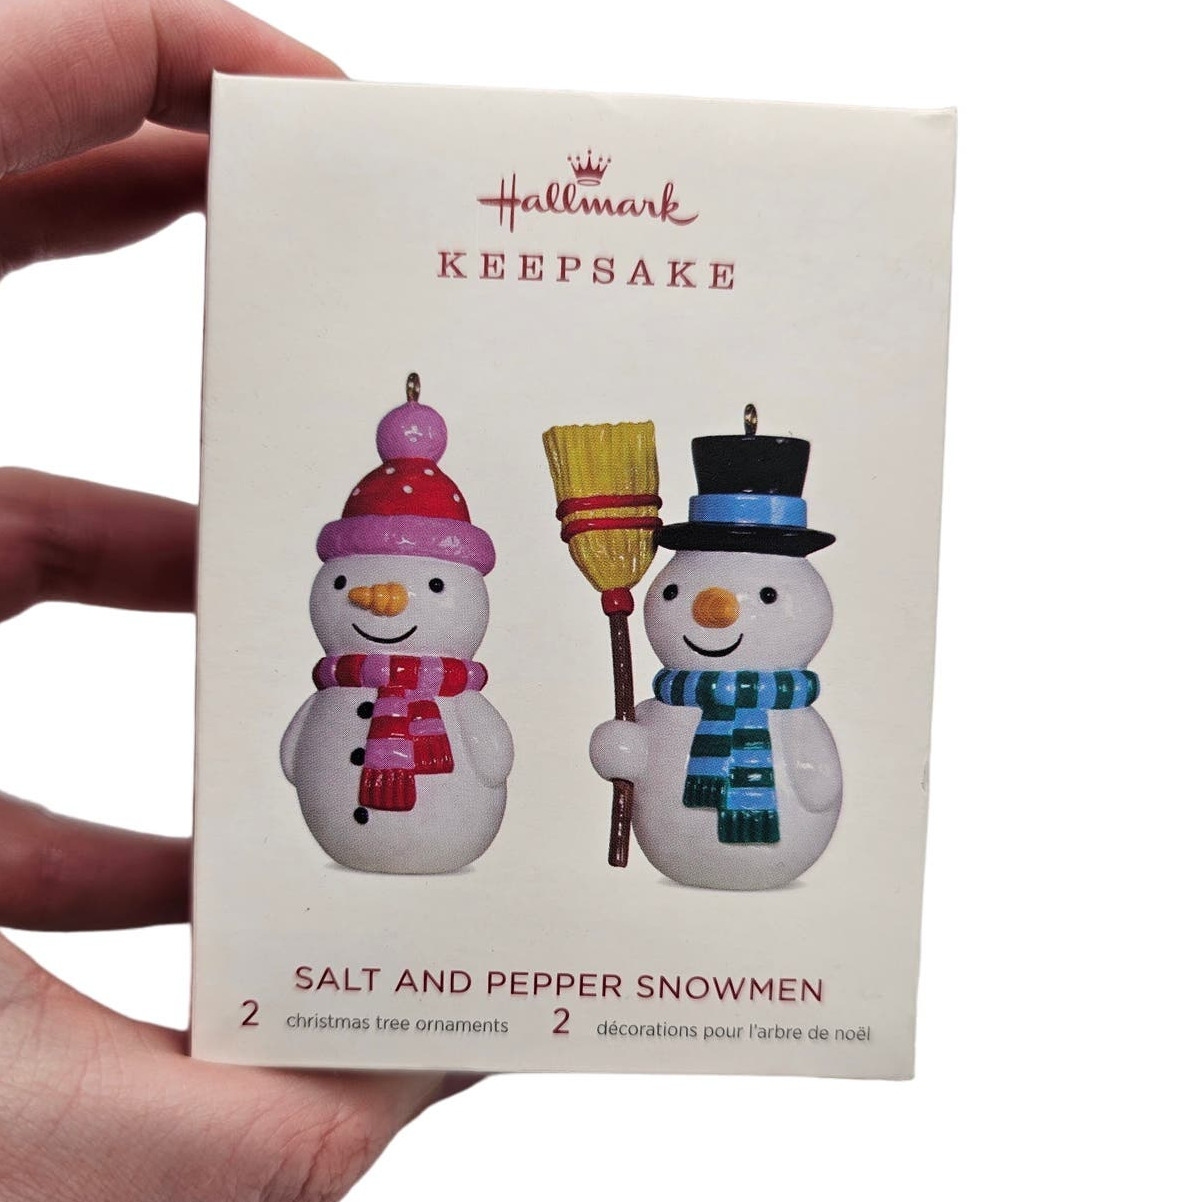 Hallmark Keepsake Christmas Ornament Set Salt and Pepper Snowmen 2018